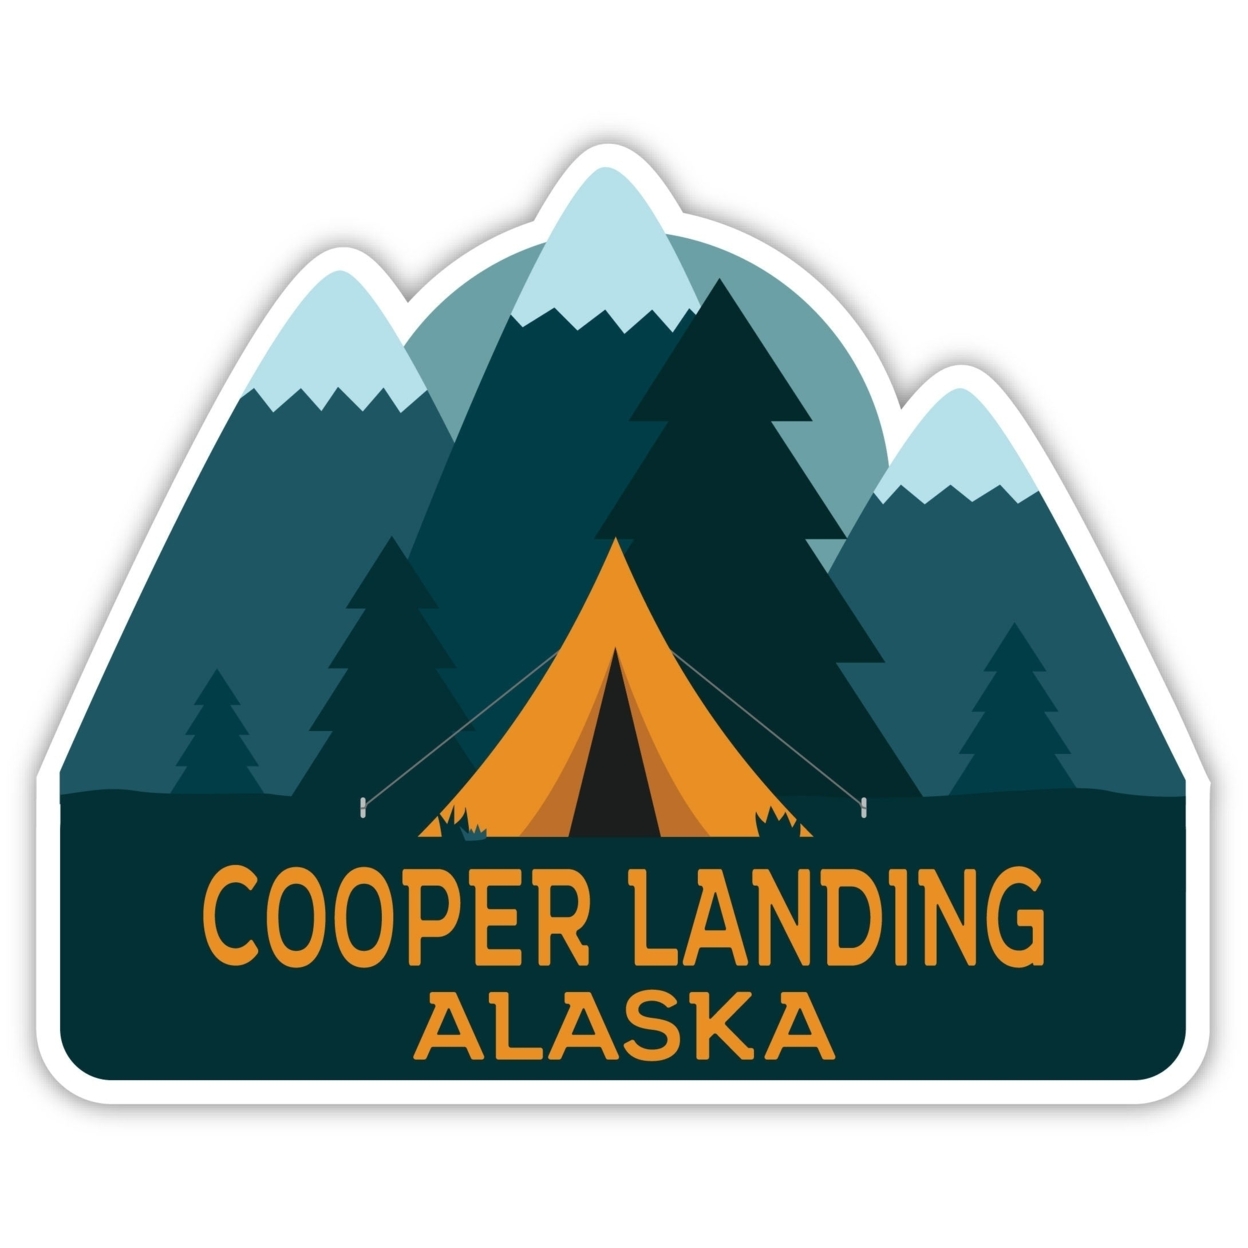 Cooper Landing Alaska Souvenir Decorative Stickers (Choose Theme And Size) - 4-Pack, 4-Inch, Tent